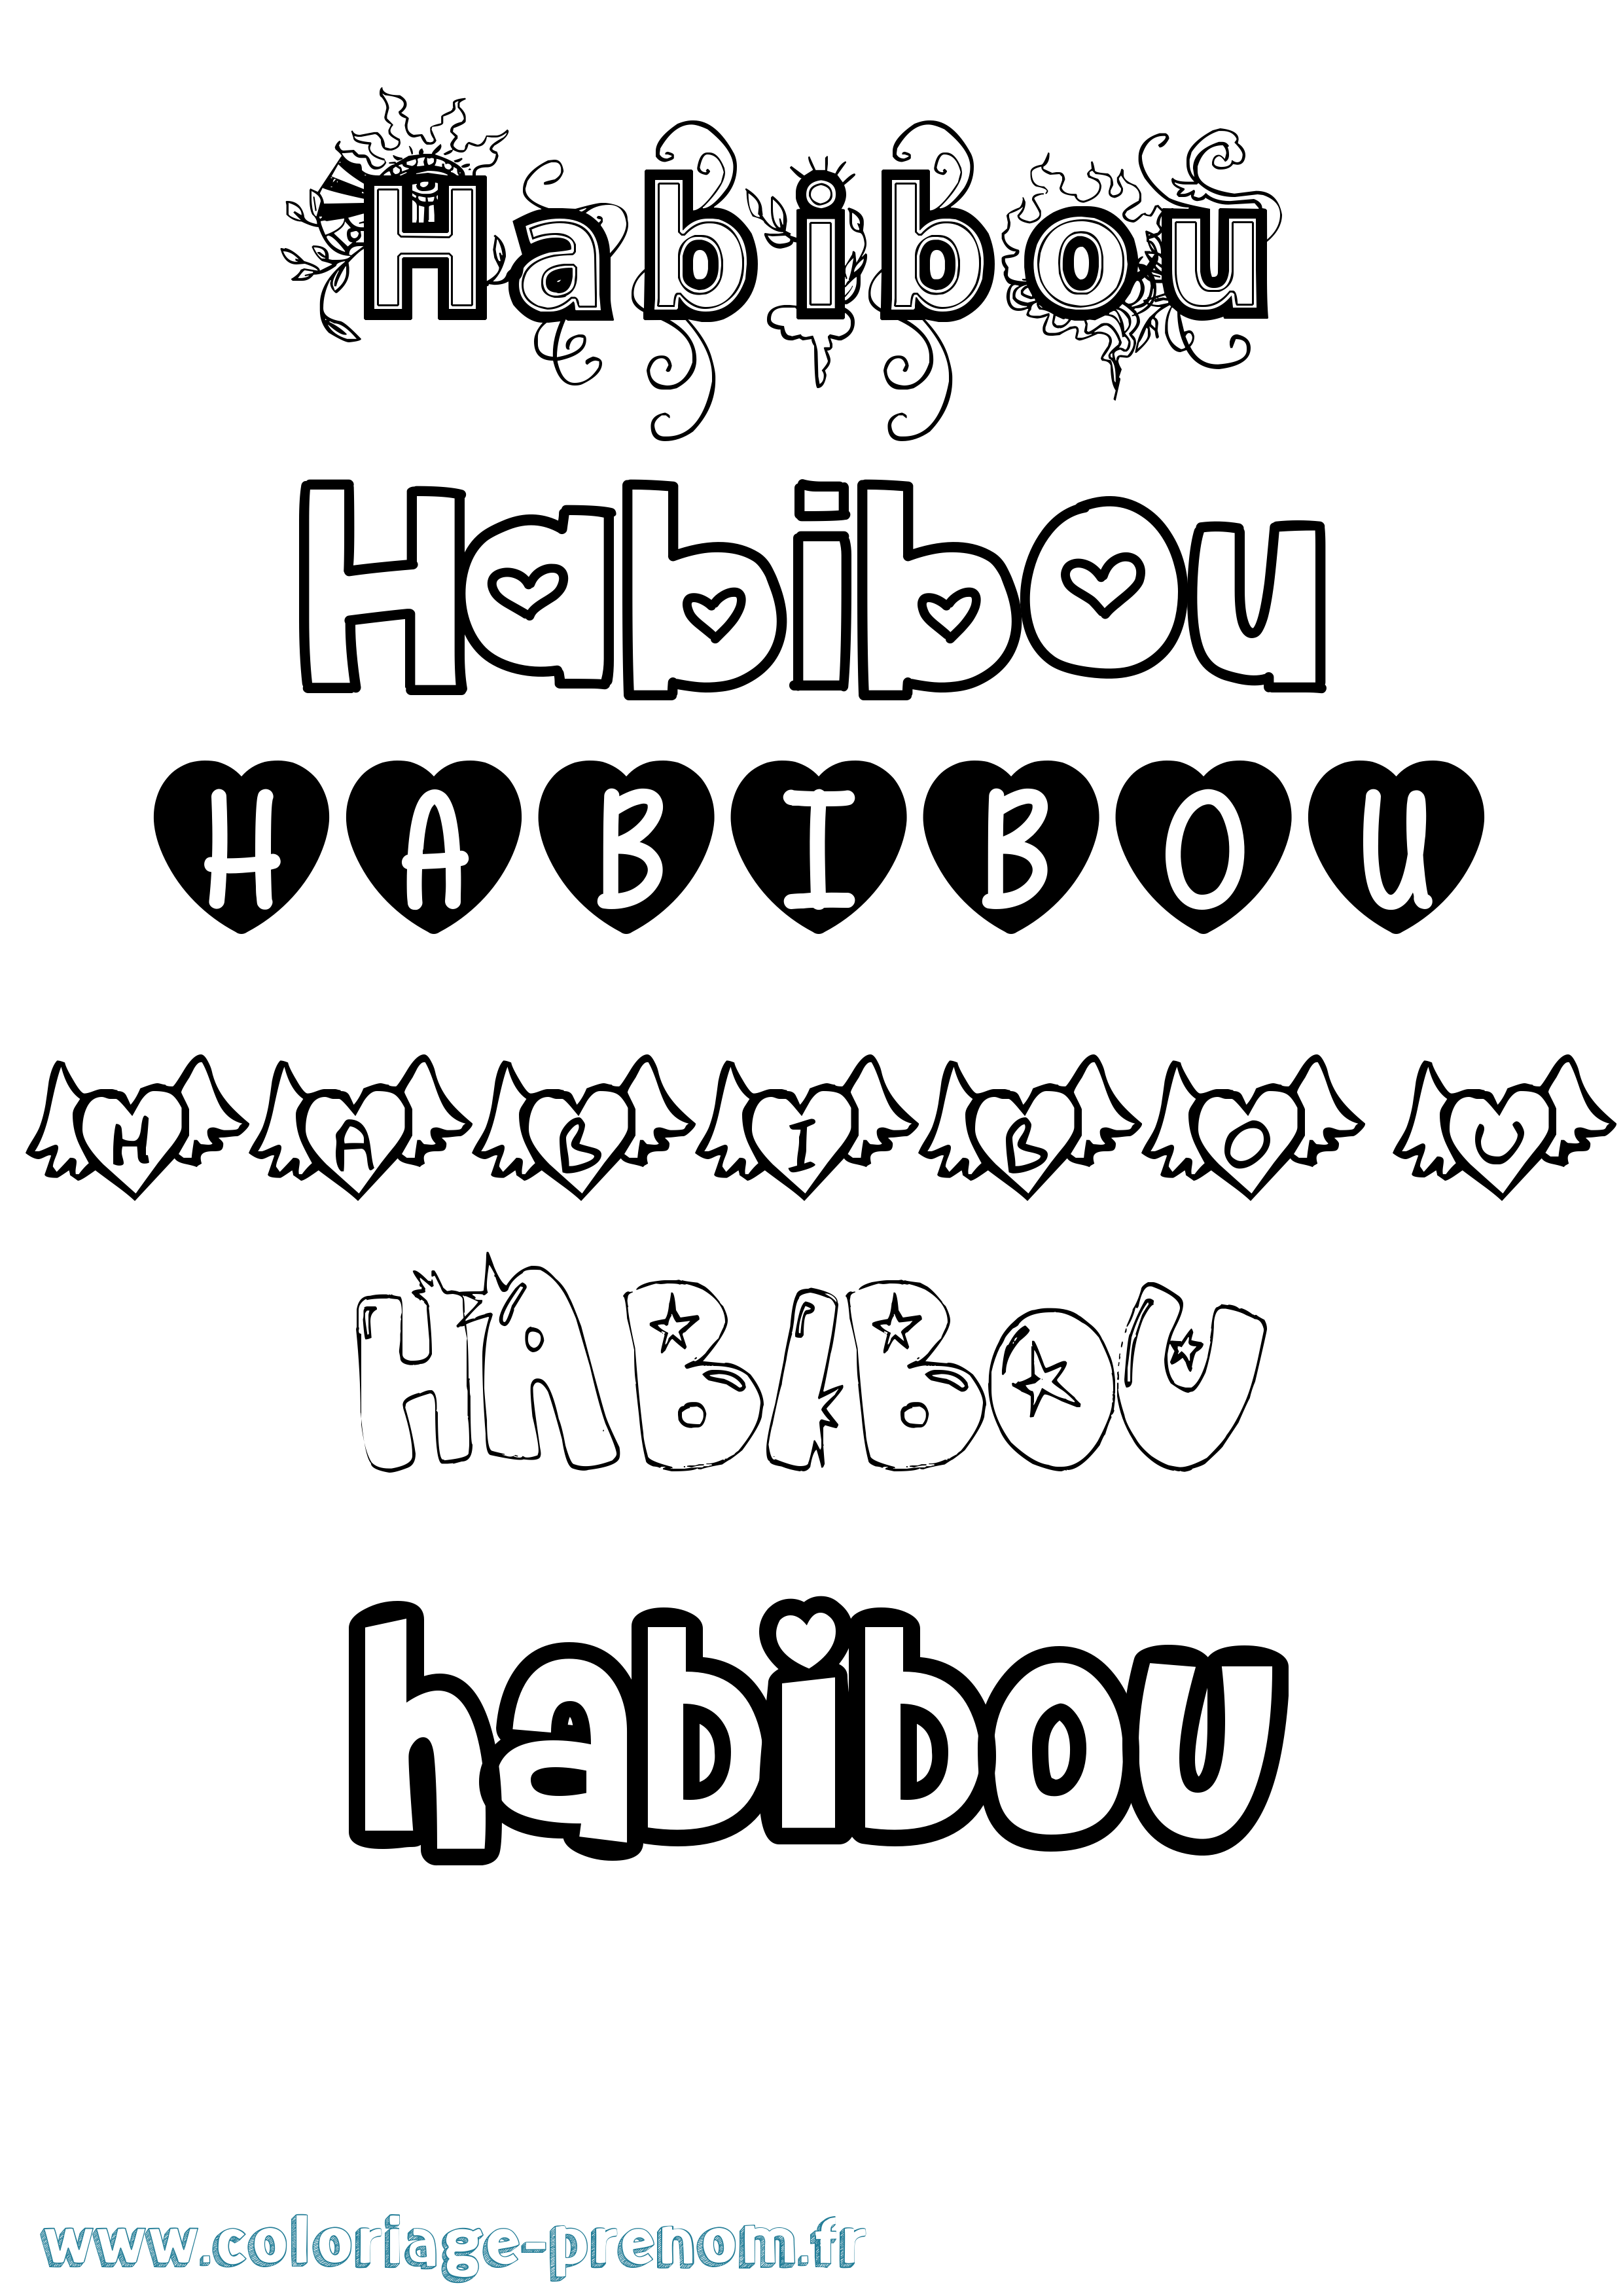 Coloriage prénom Habibou Girly